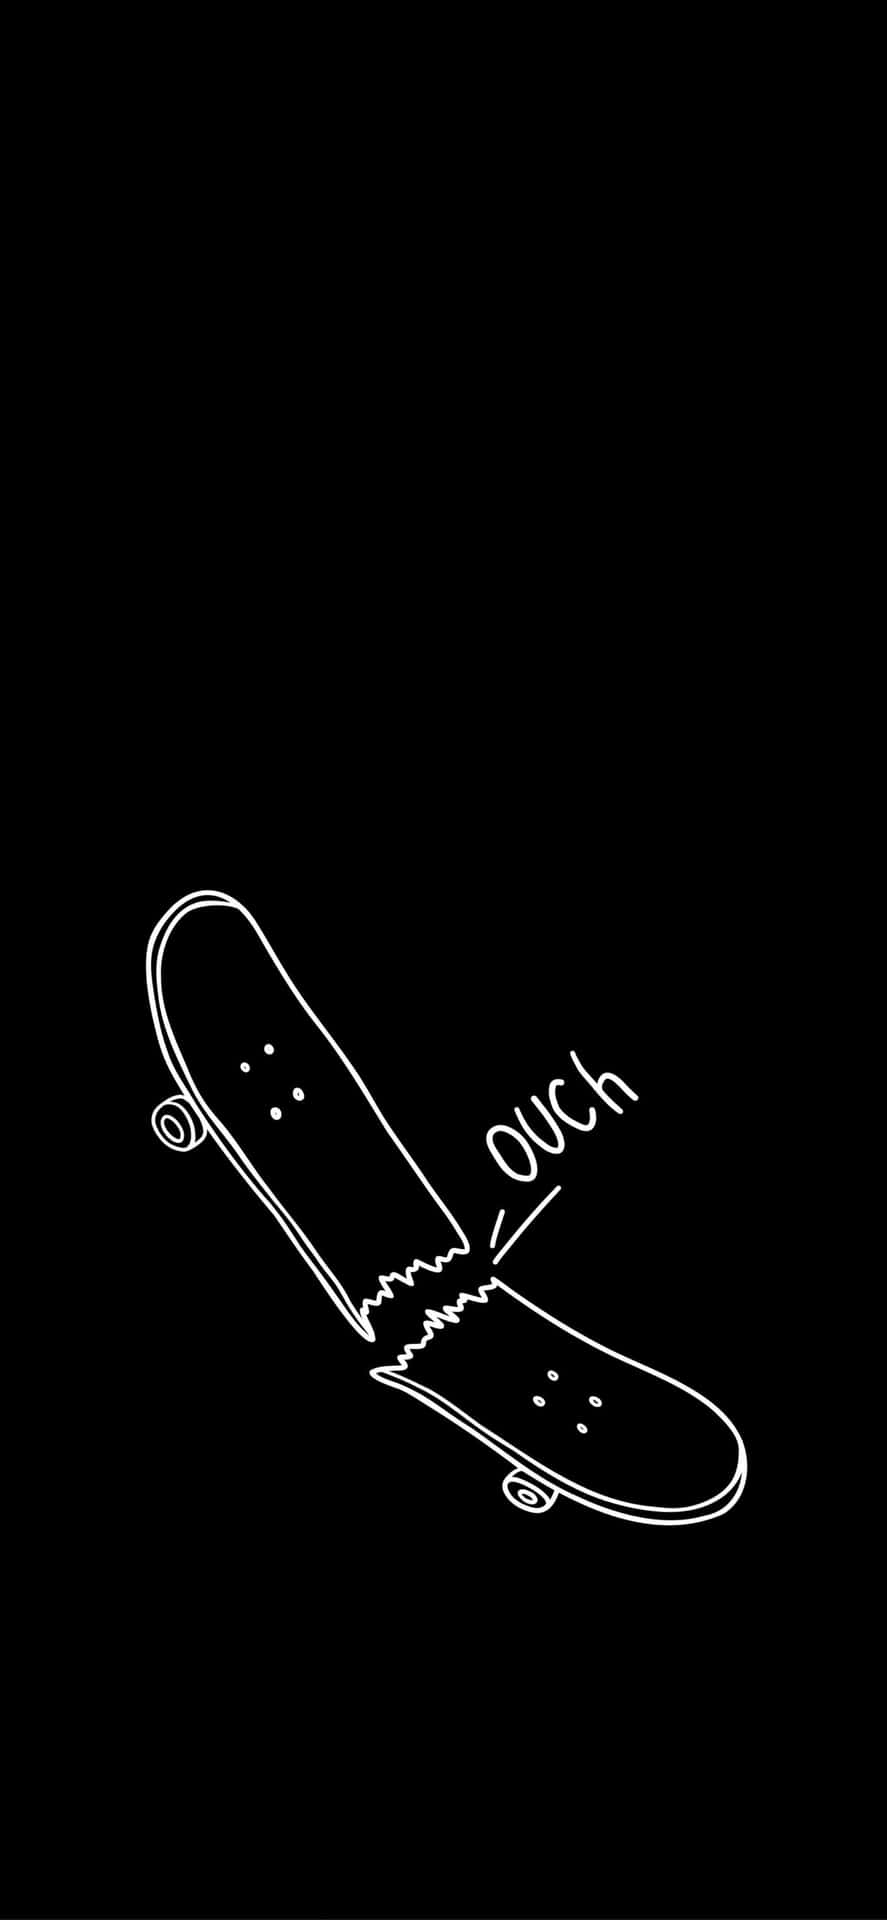 Skateboard Ouch Illustration Background